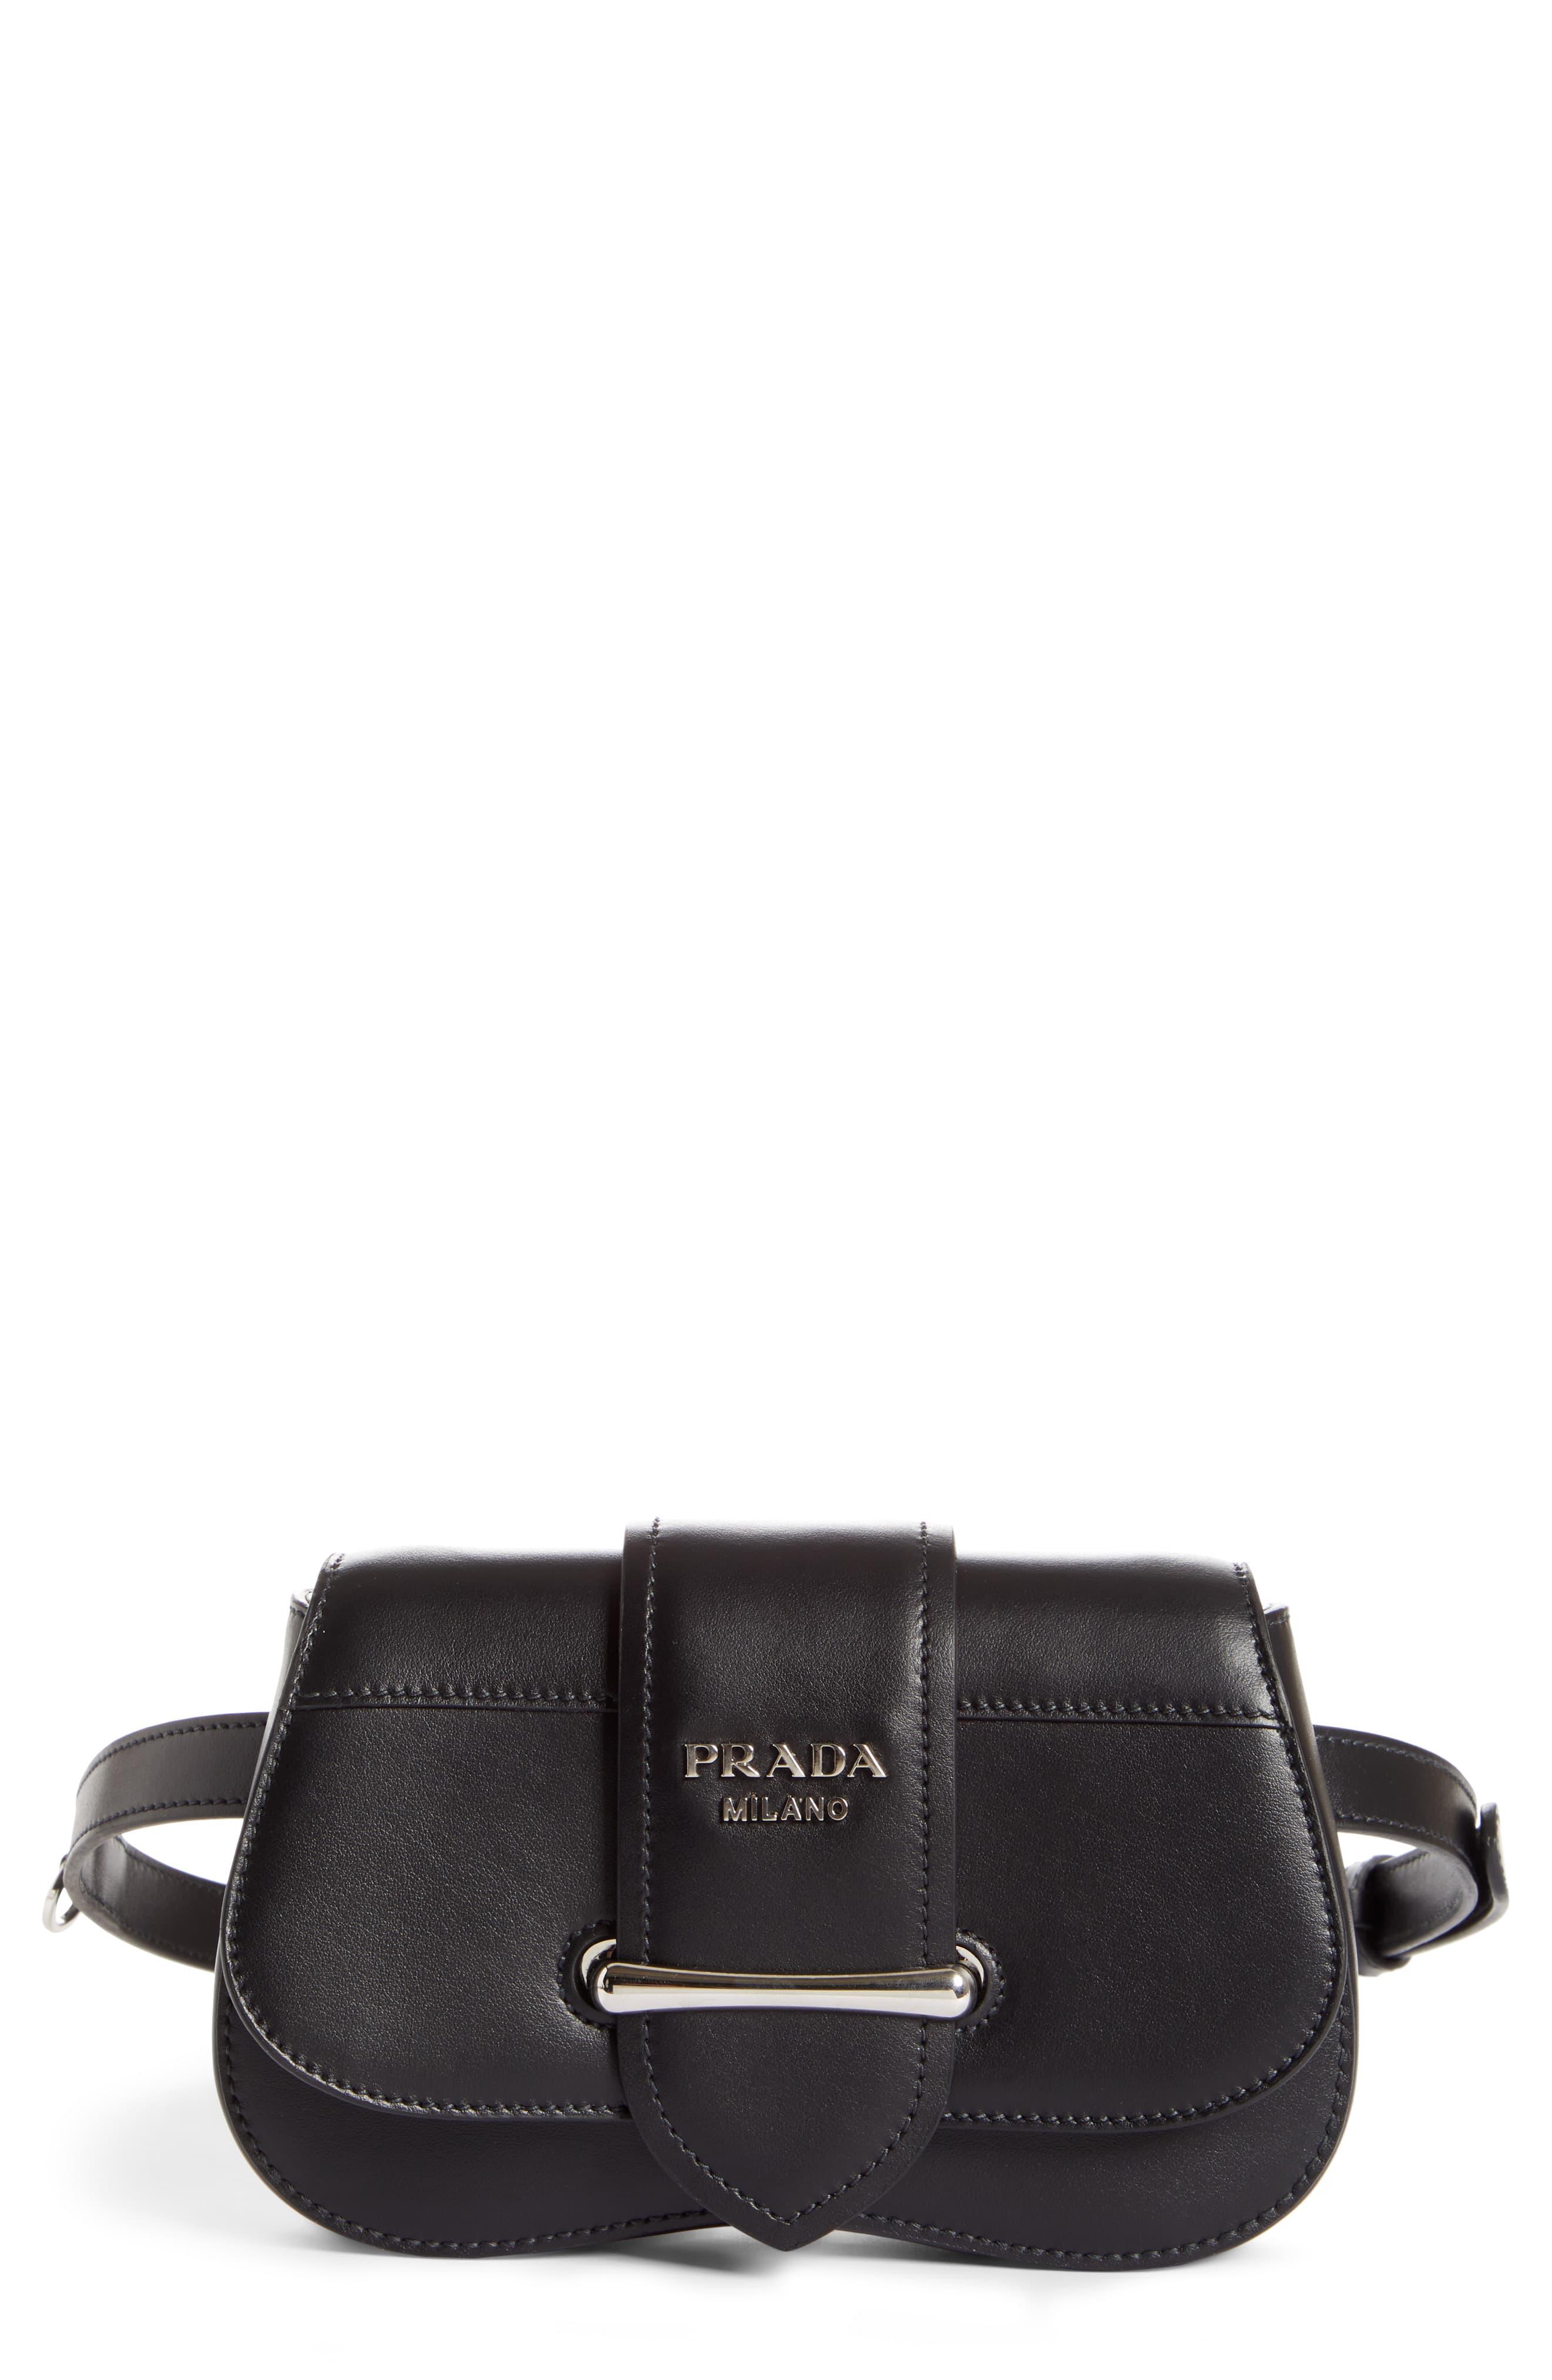 Prada Convertible Calfskin Leather Belt Bag in Black - Lyst